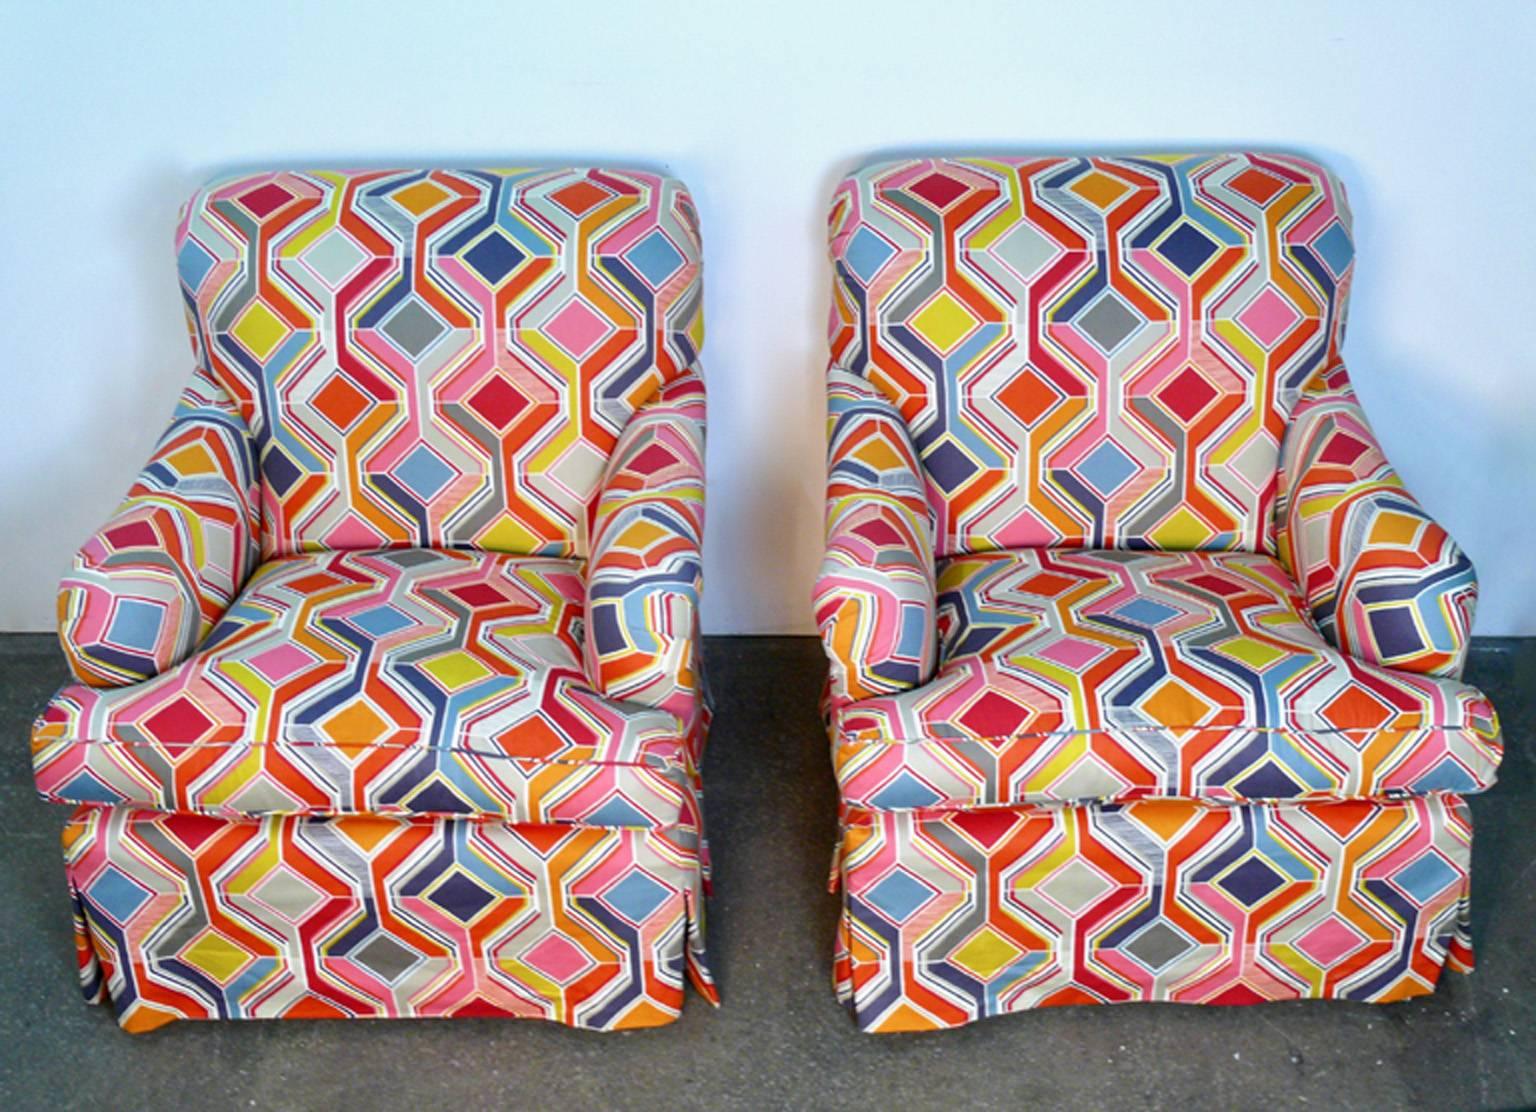 Pair of custom Bridgewater armchairs.

On swivels, very comfortable. Vibrantly colorful geometric print.